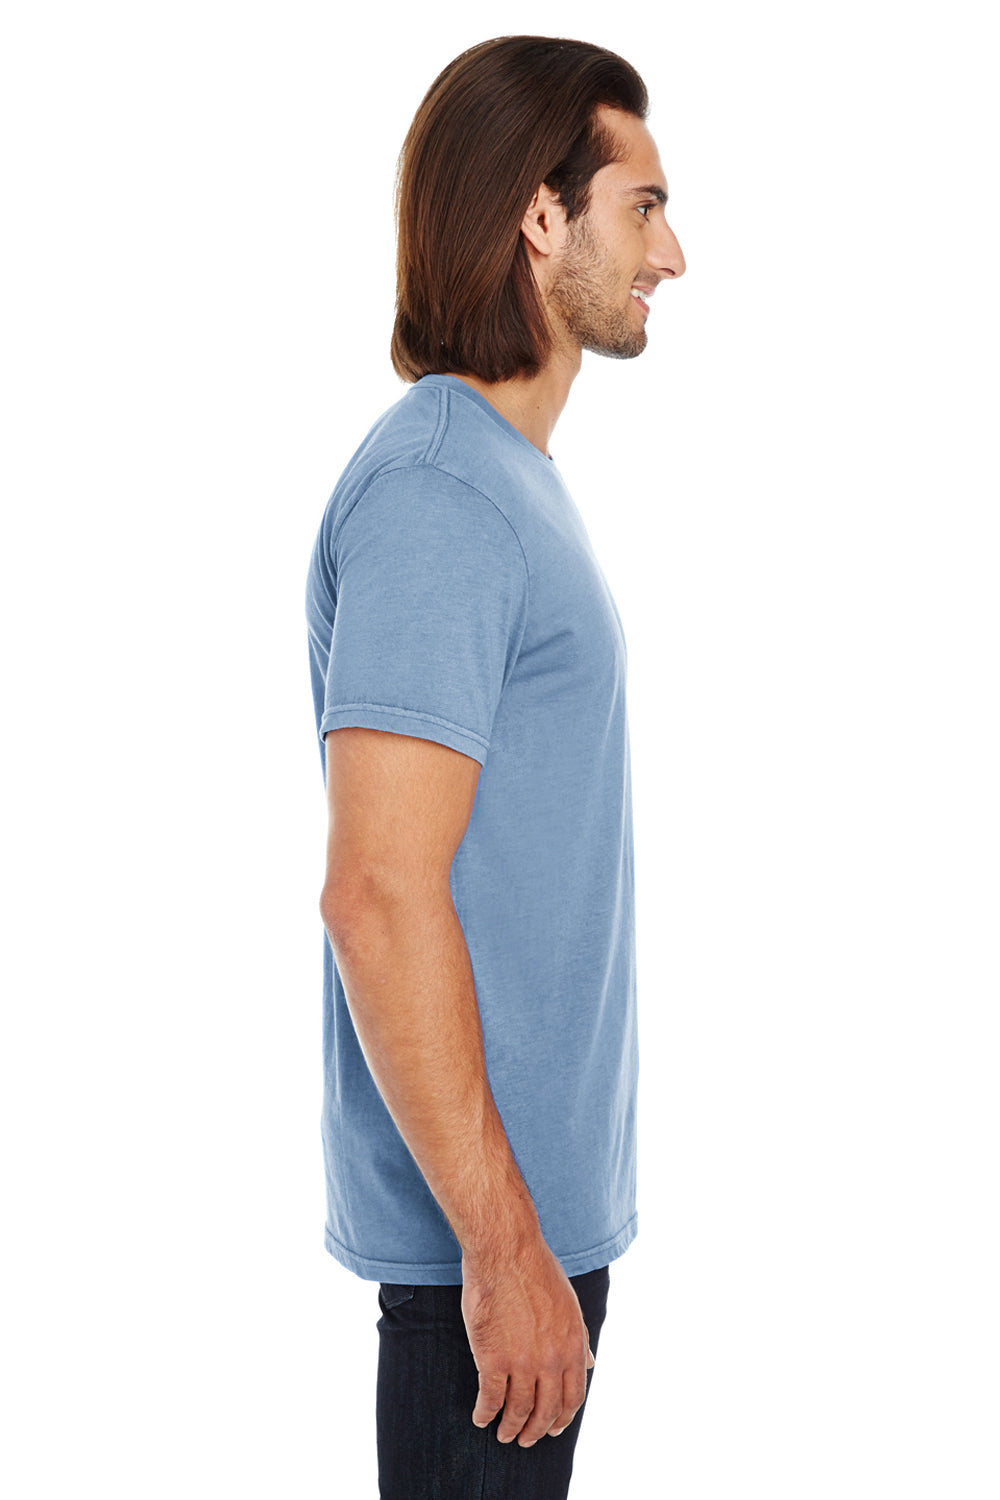 Threadfast Apparel 130A Mens Short Sleeve Crewneck T-Shirt Denim Blue Side